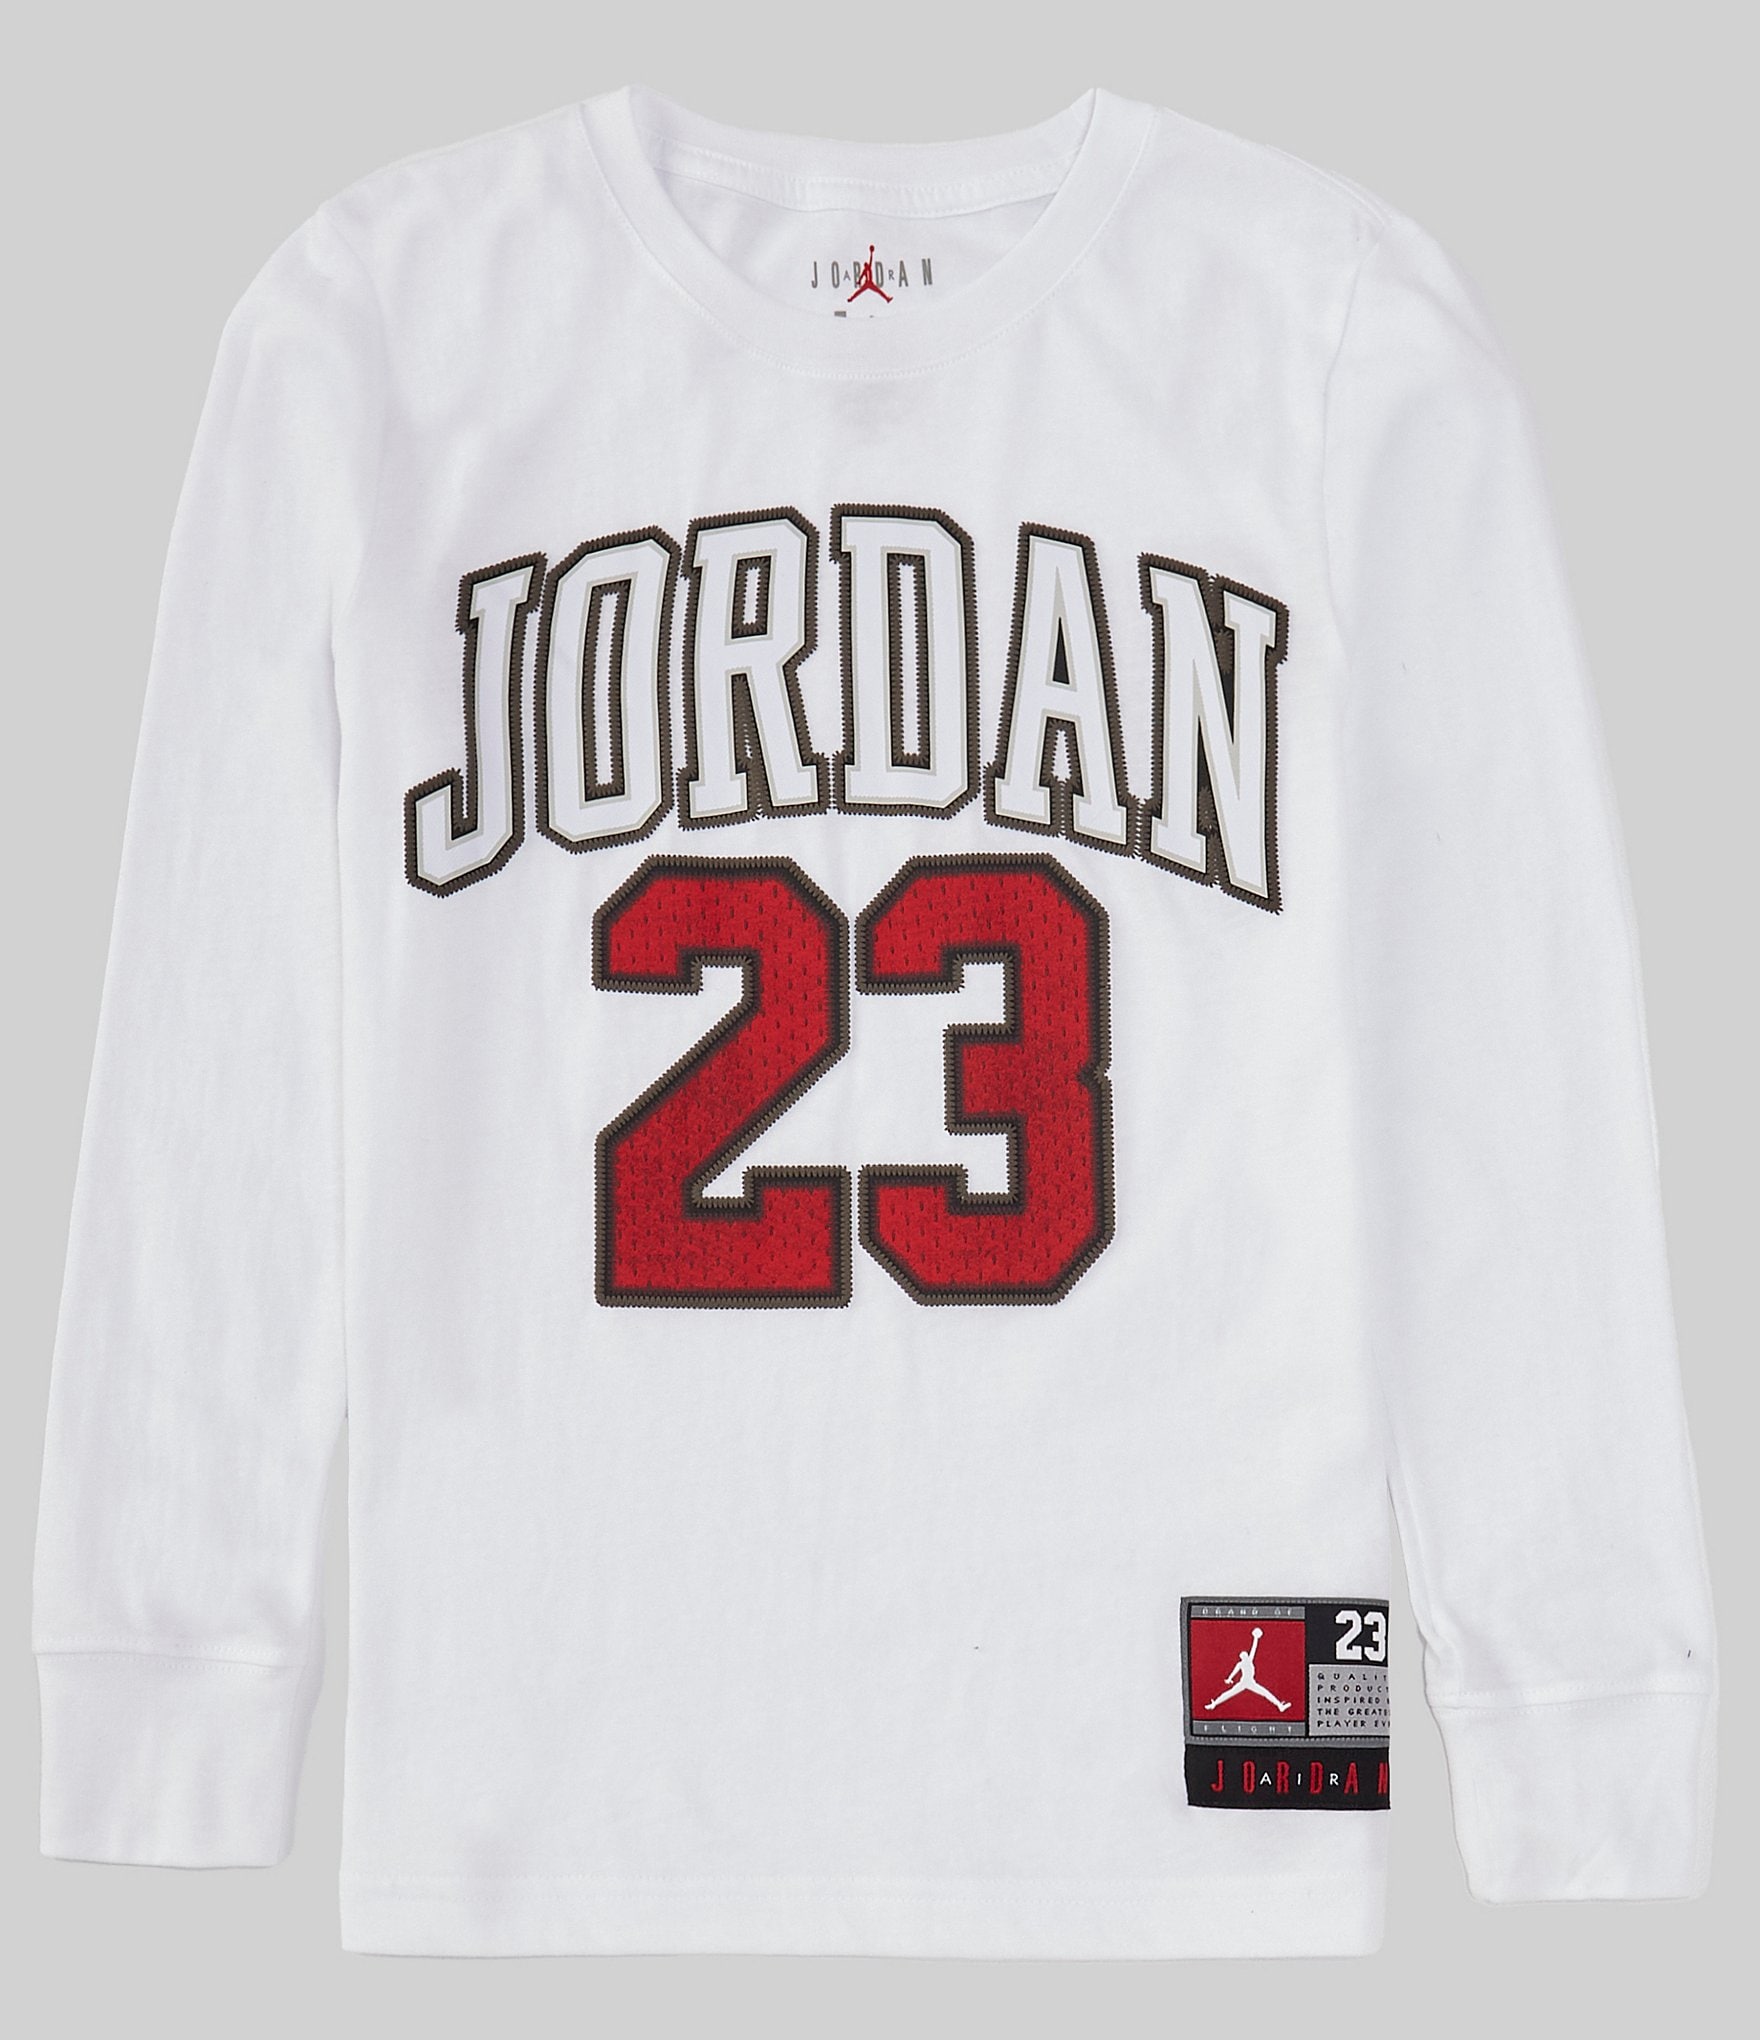 Jordan, Shirts, Red Jordan 23 Long Sleeve Graphic Tshirt